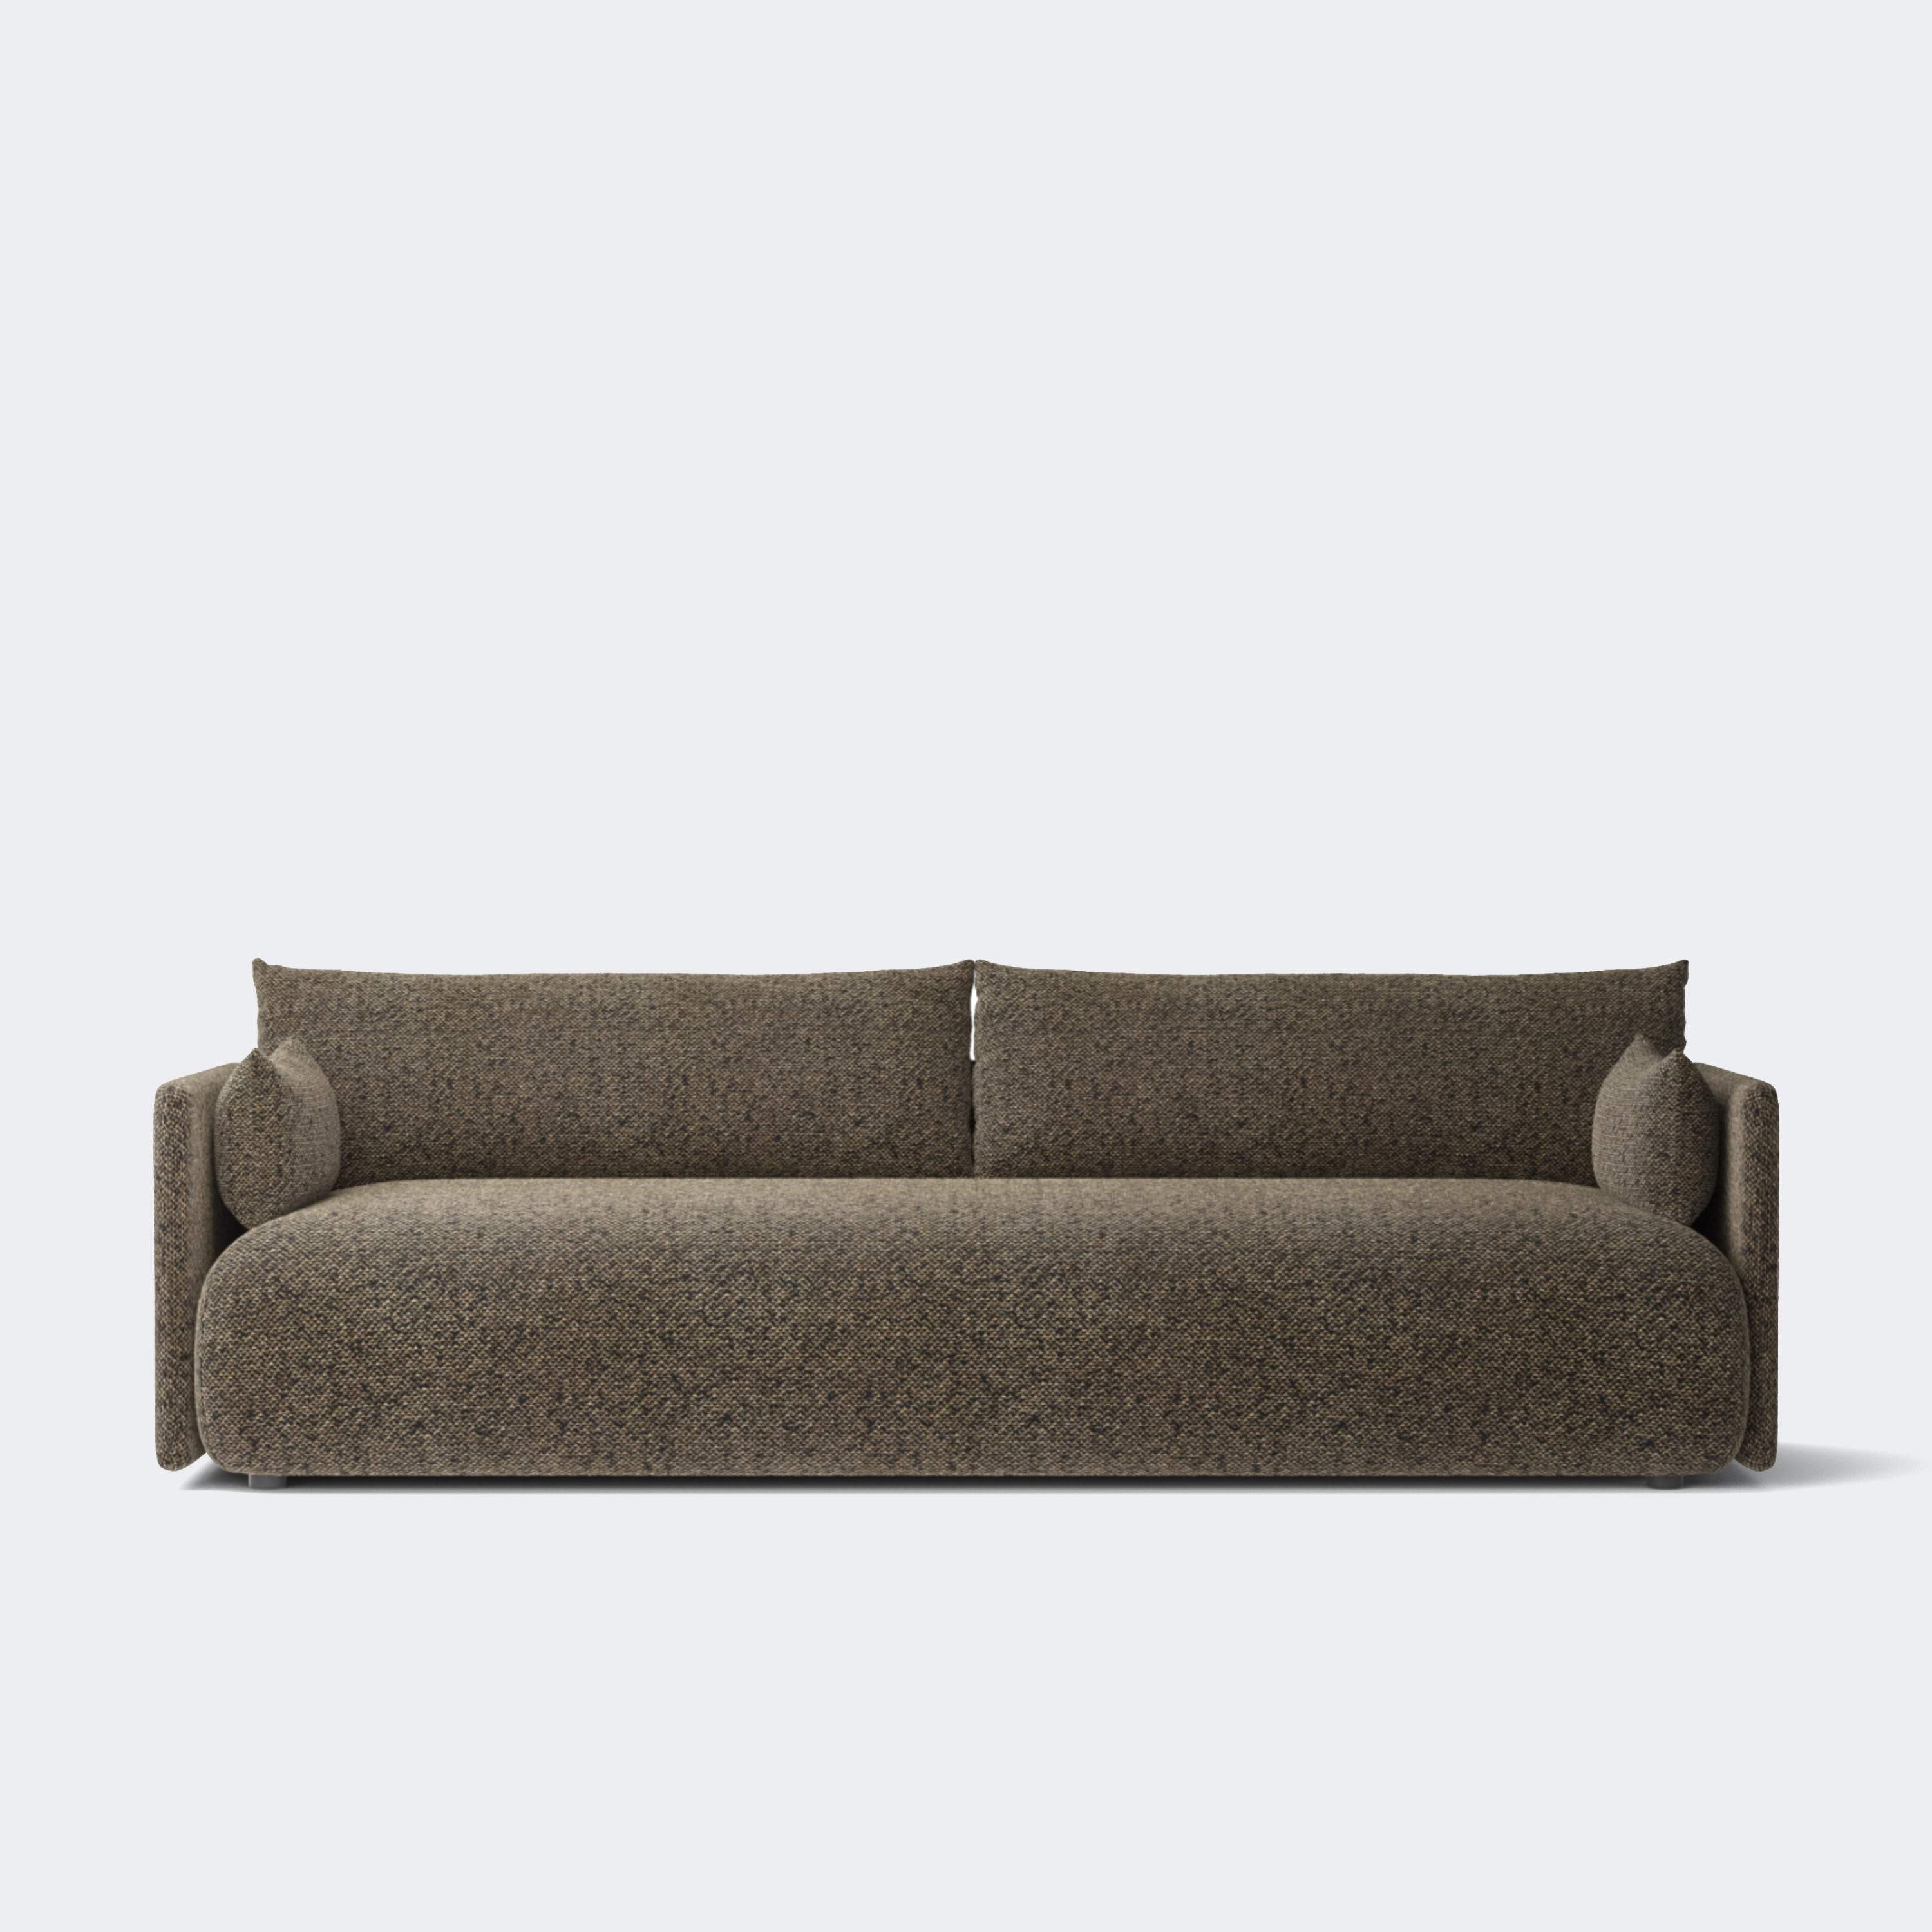 Audo Copenhagen Offset Sofa, 3 Seater Made To Order (10-12 Weeks) Safire #001 - KANSO